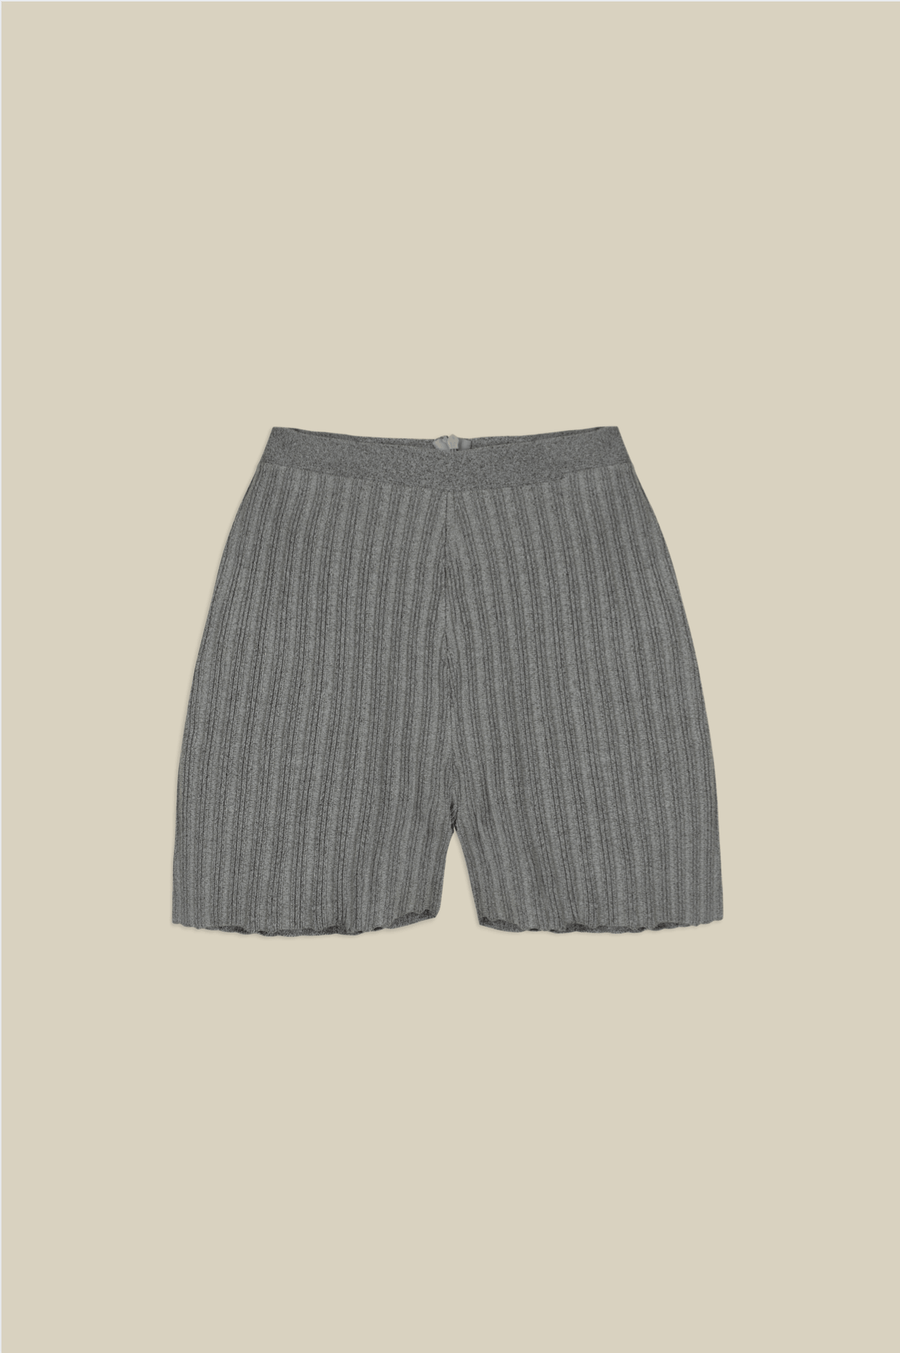 "COLT" Bandage Shorts in Marl Grey